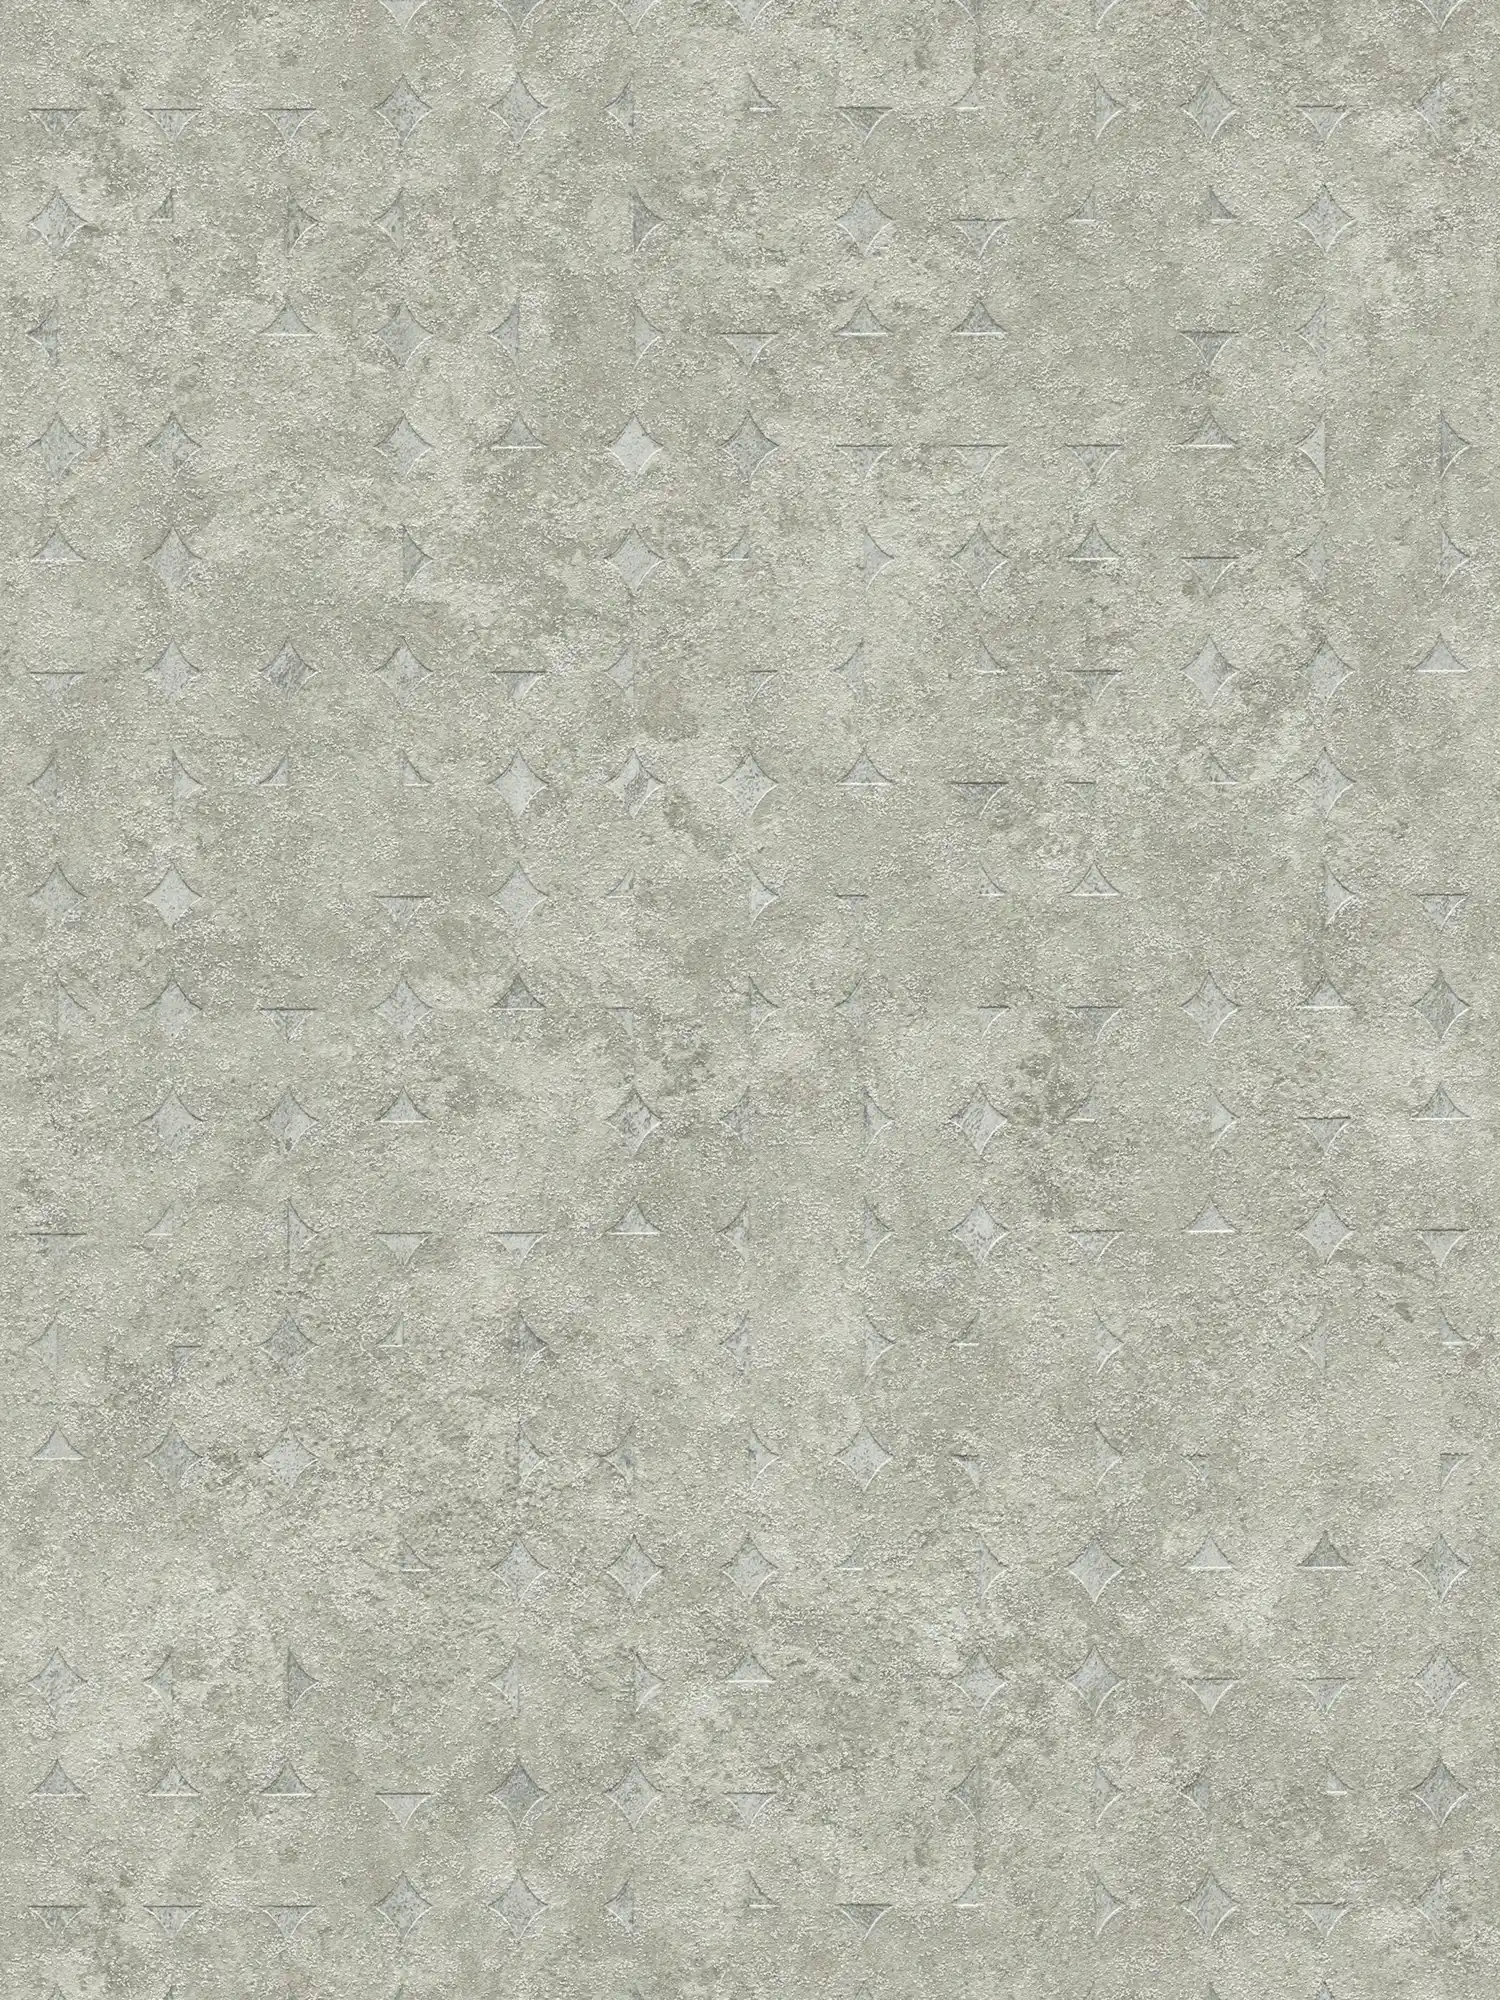 Plain textured non-woven wallpaper with diamond pattern - grey, green
